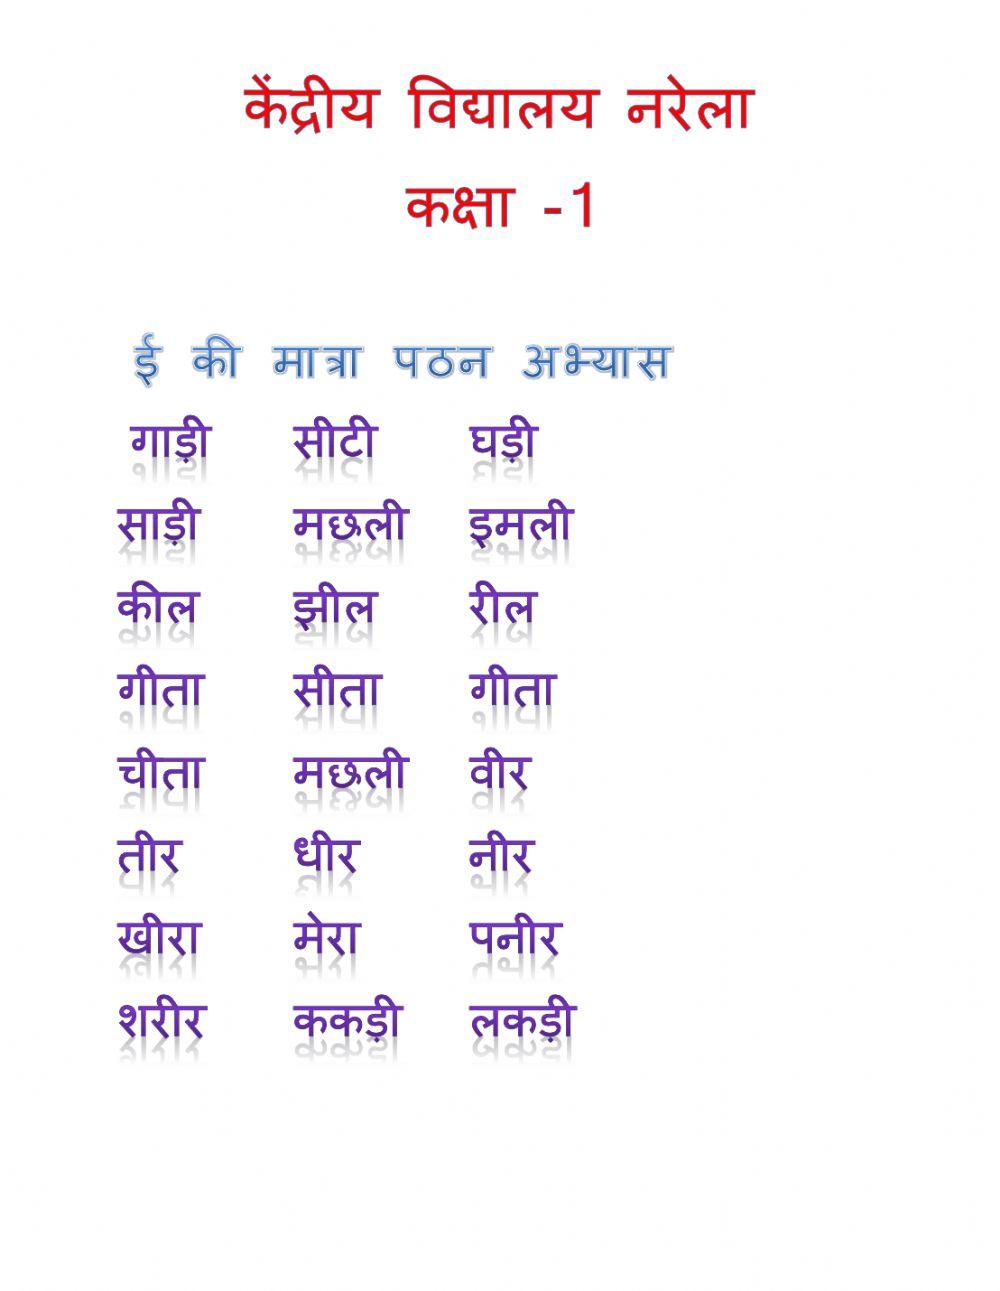 Hindi reading ee ki matra